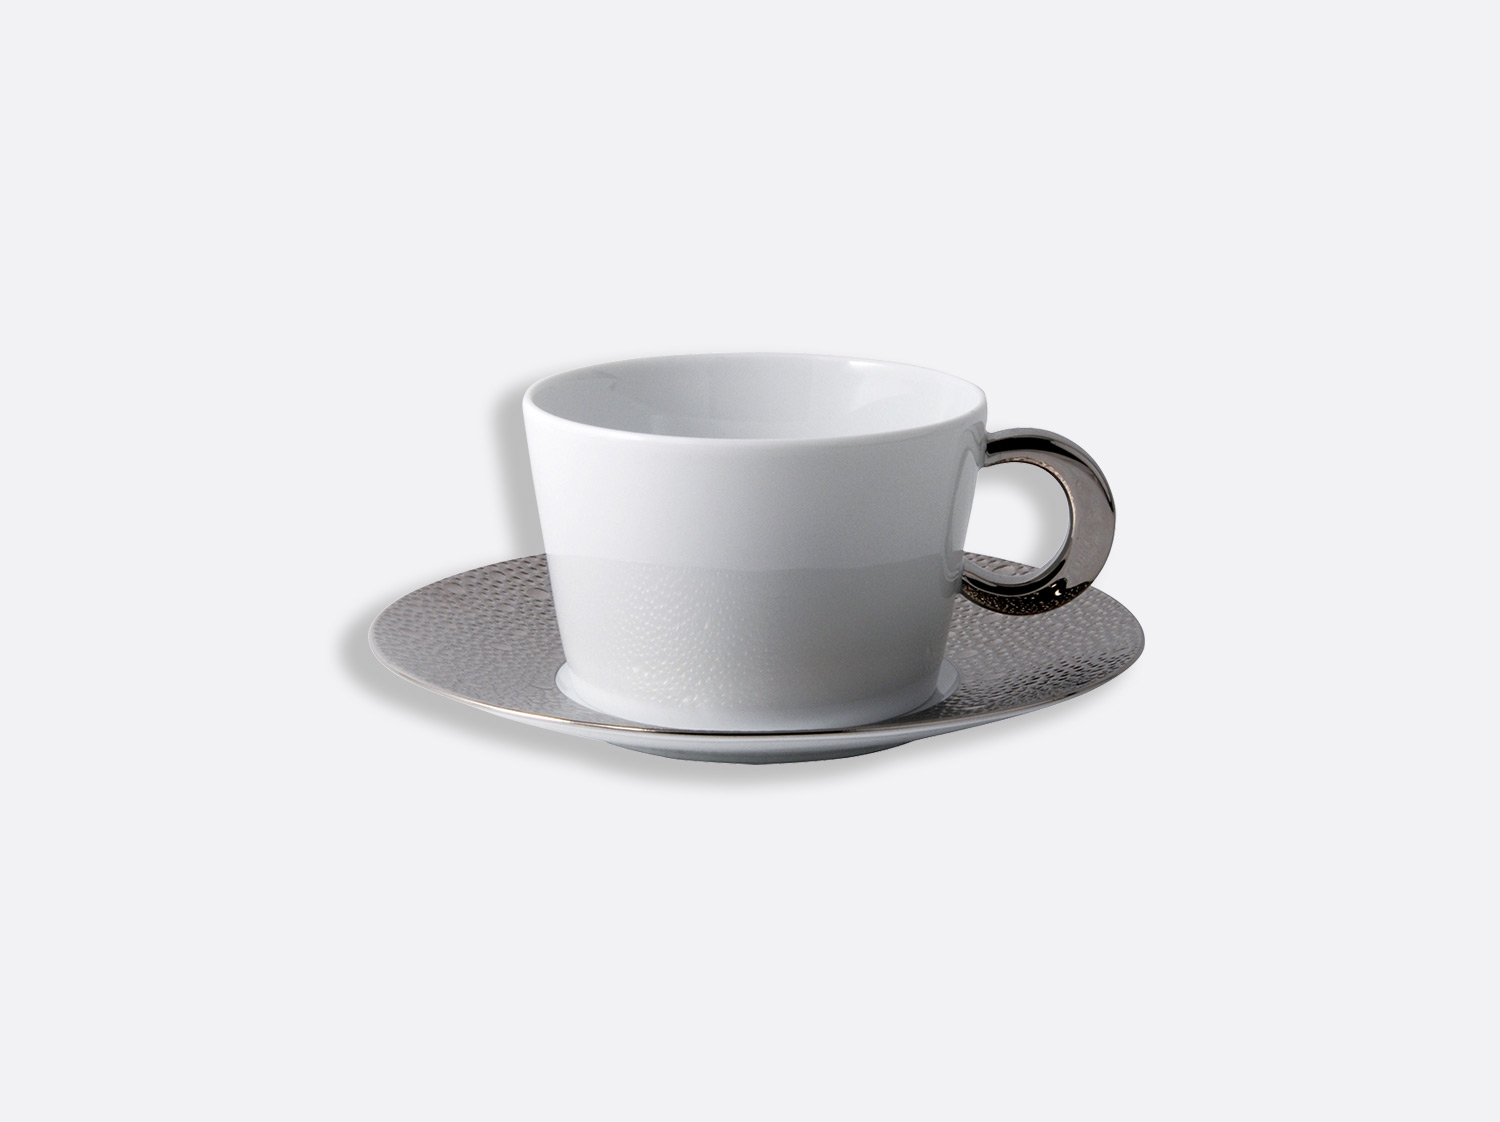 White Breakfast Set Saucer, White Porcelain Coffee Set